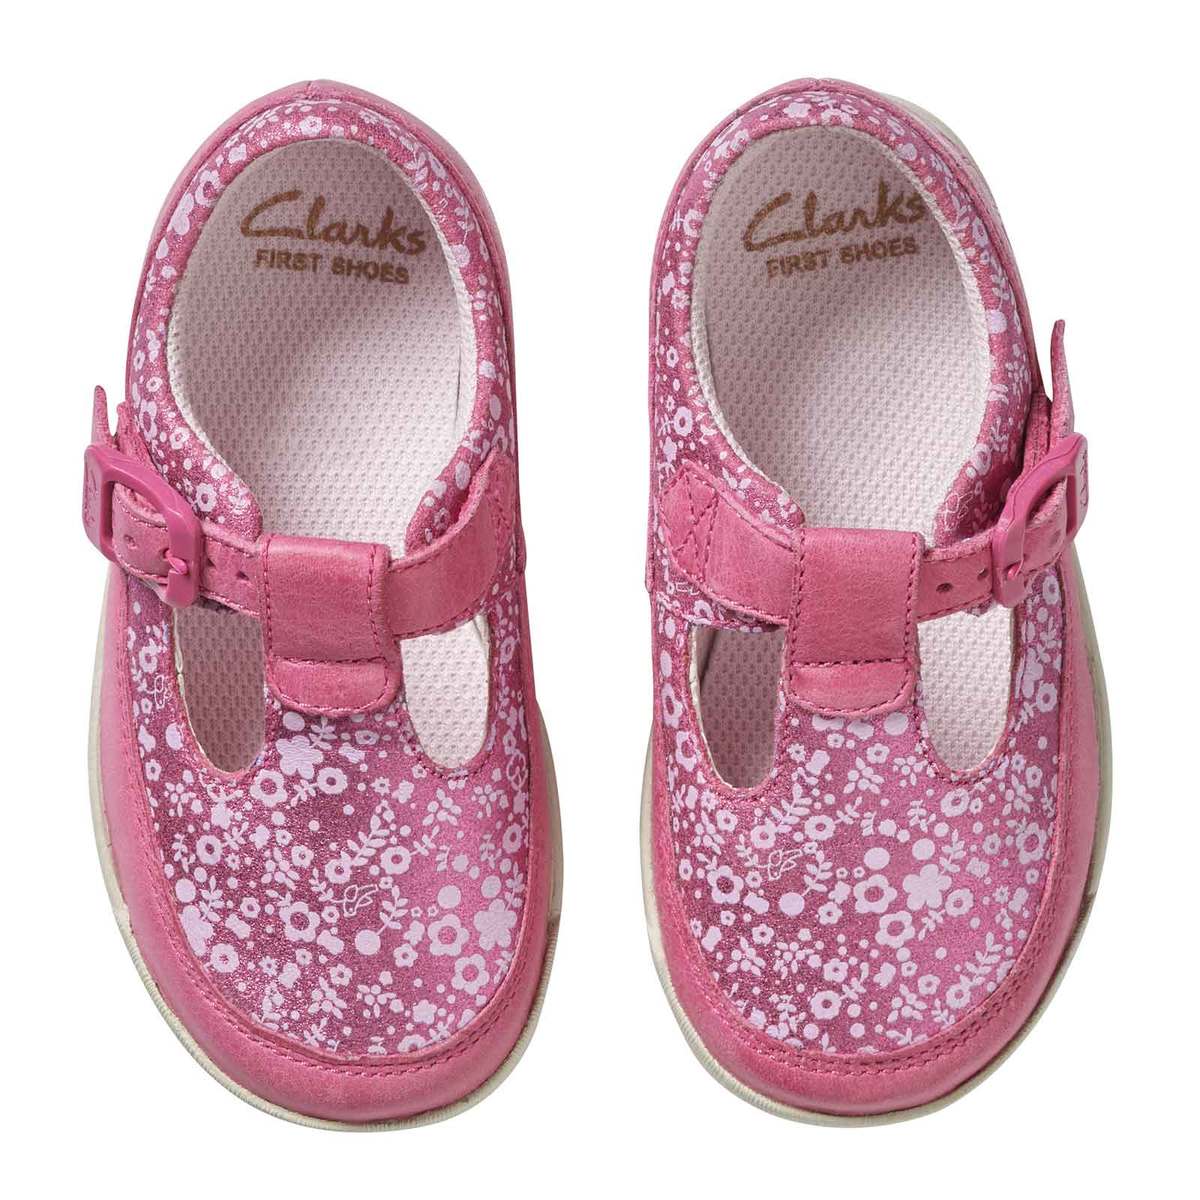 clarks kids shoes discount